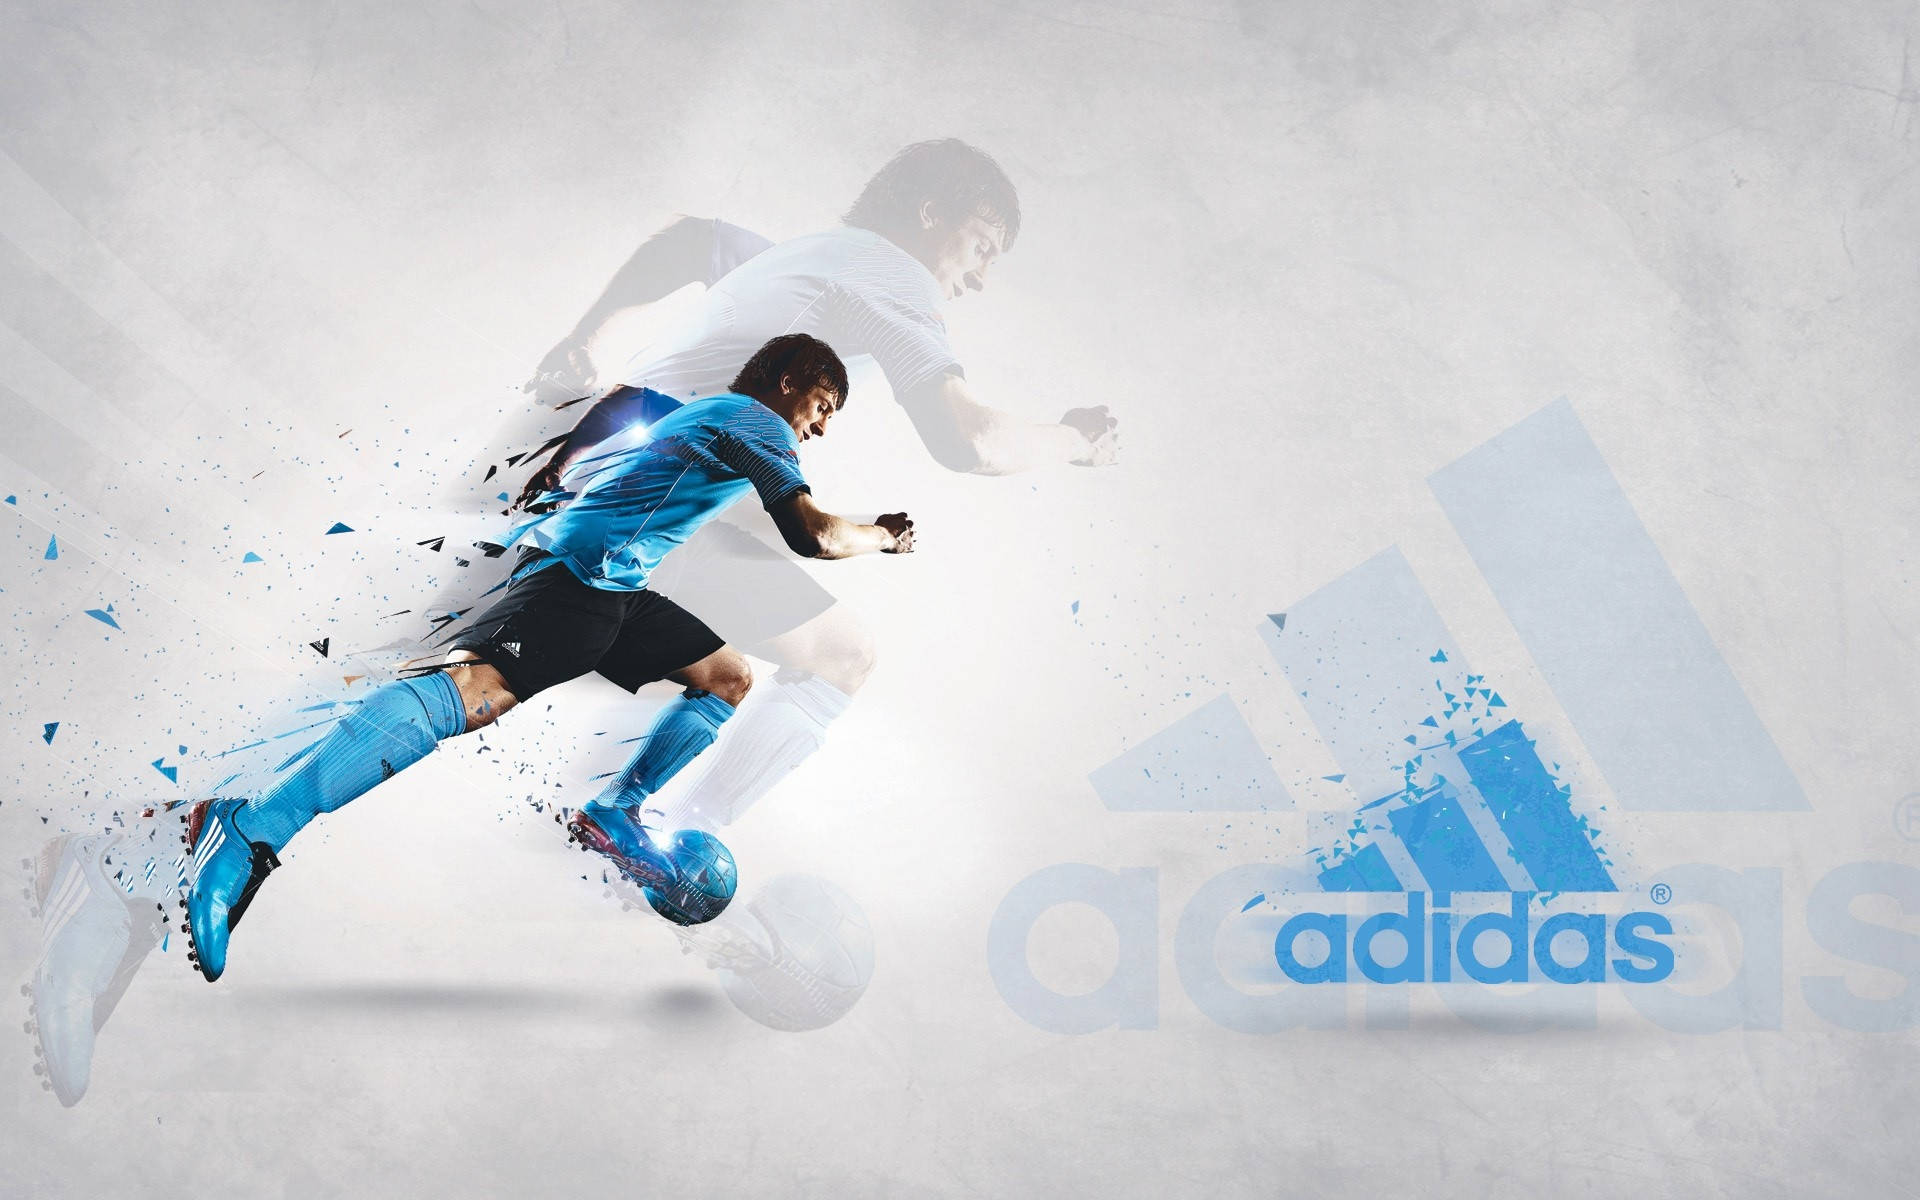 Lionel Messi Adidas Poster